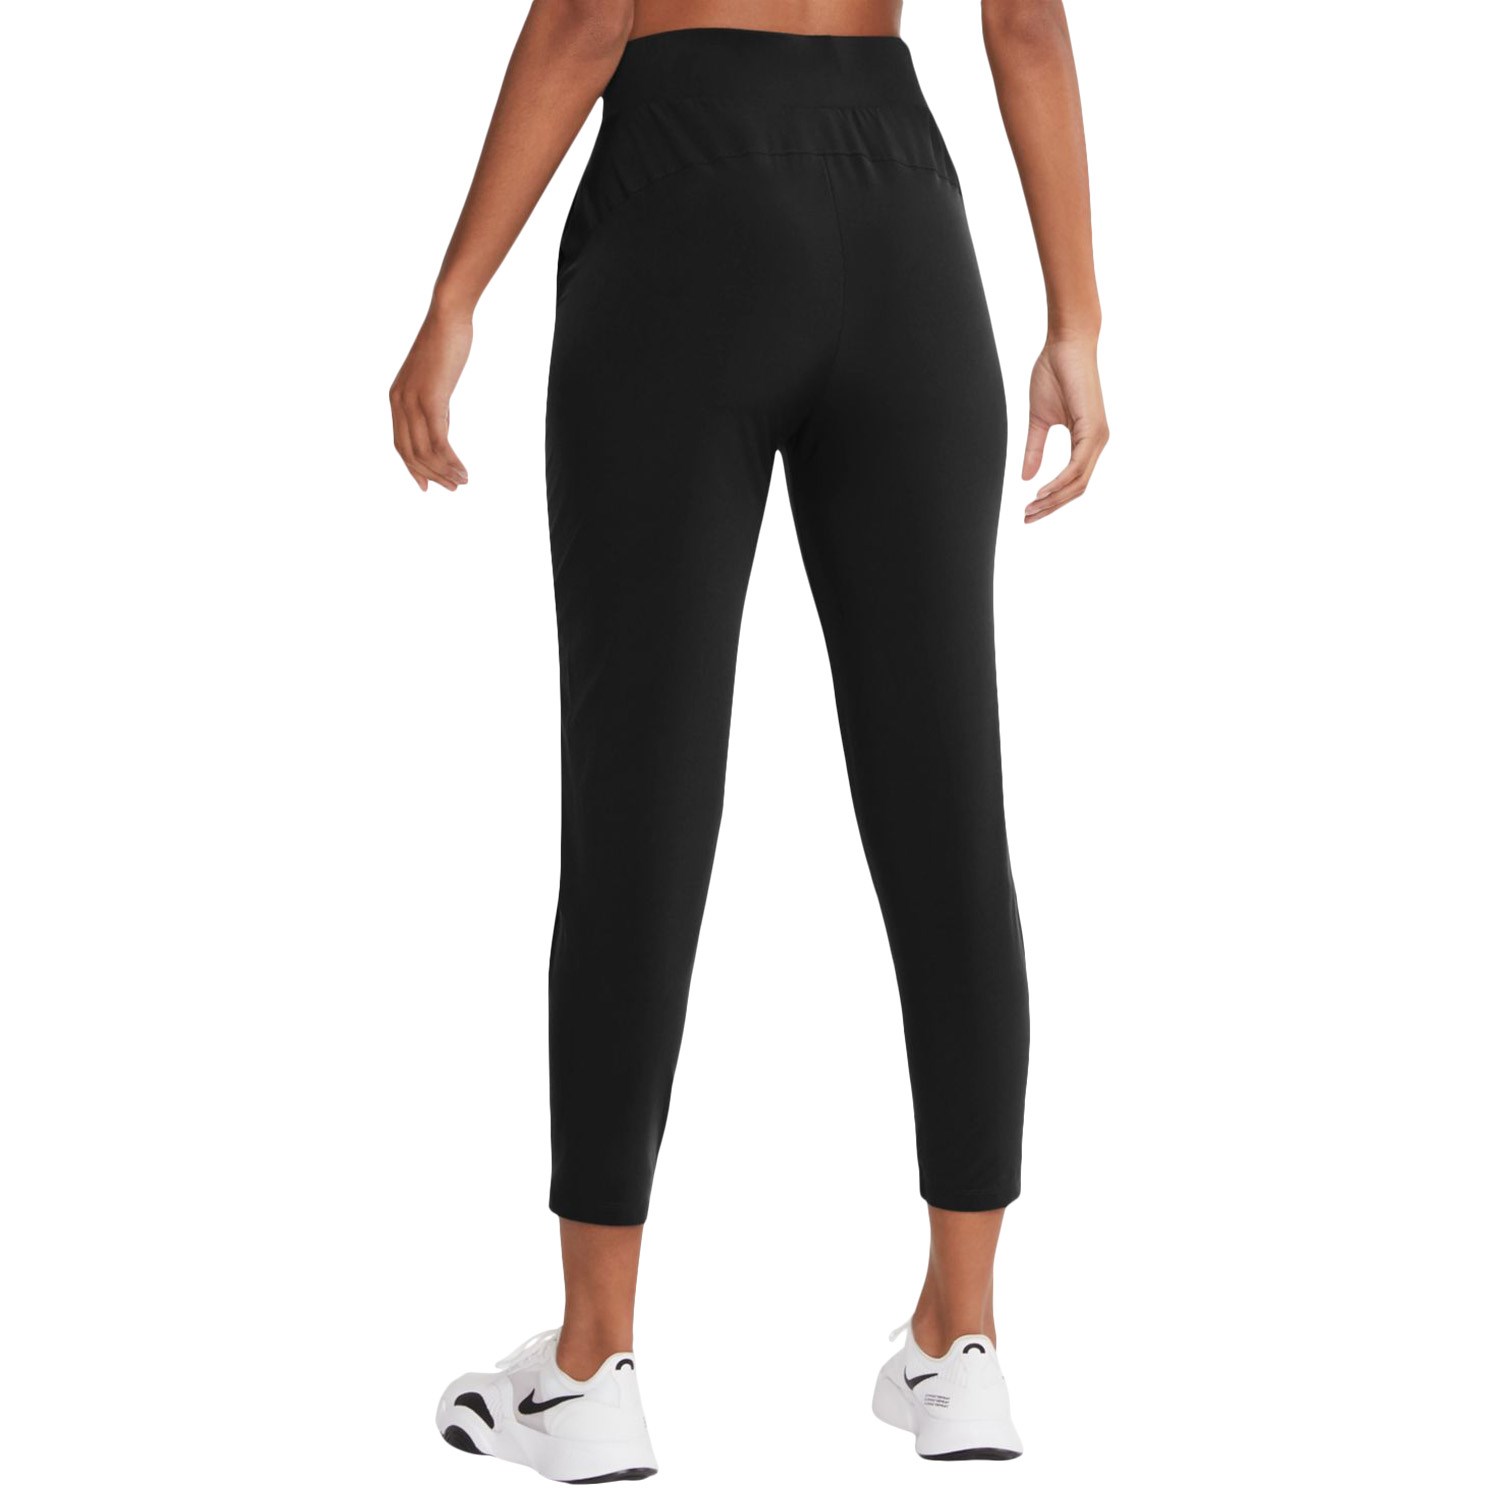 Nike Women's Plus Size Bliss Victory 7/8 Training Pants Black 1X Free Ship  NWT